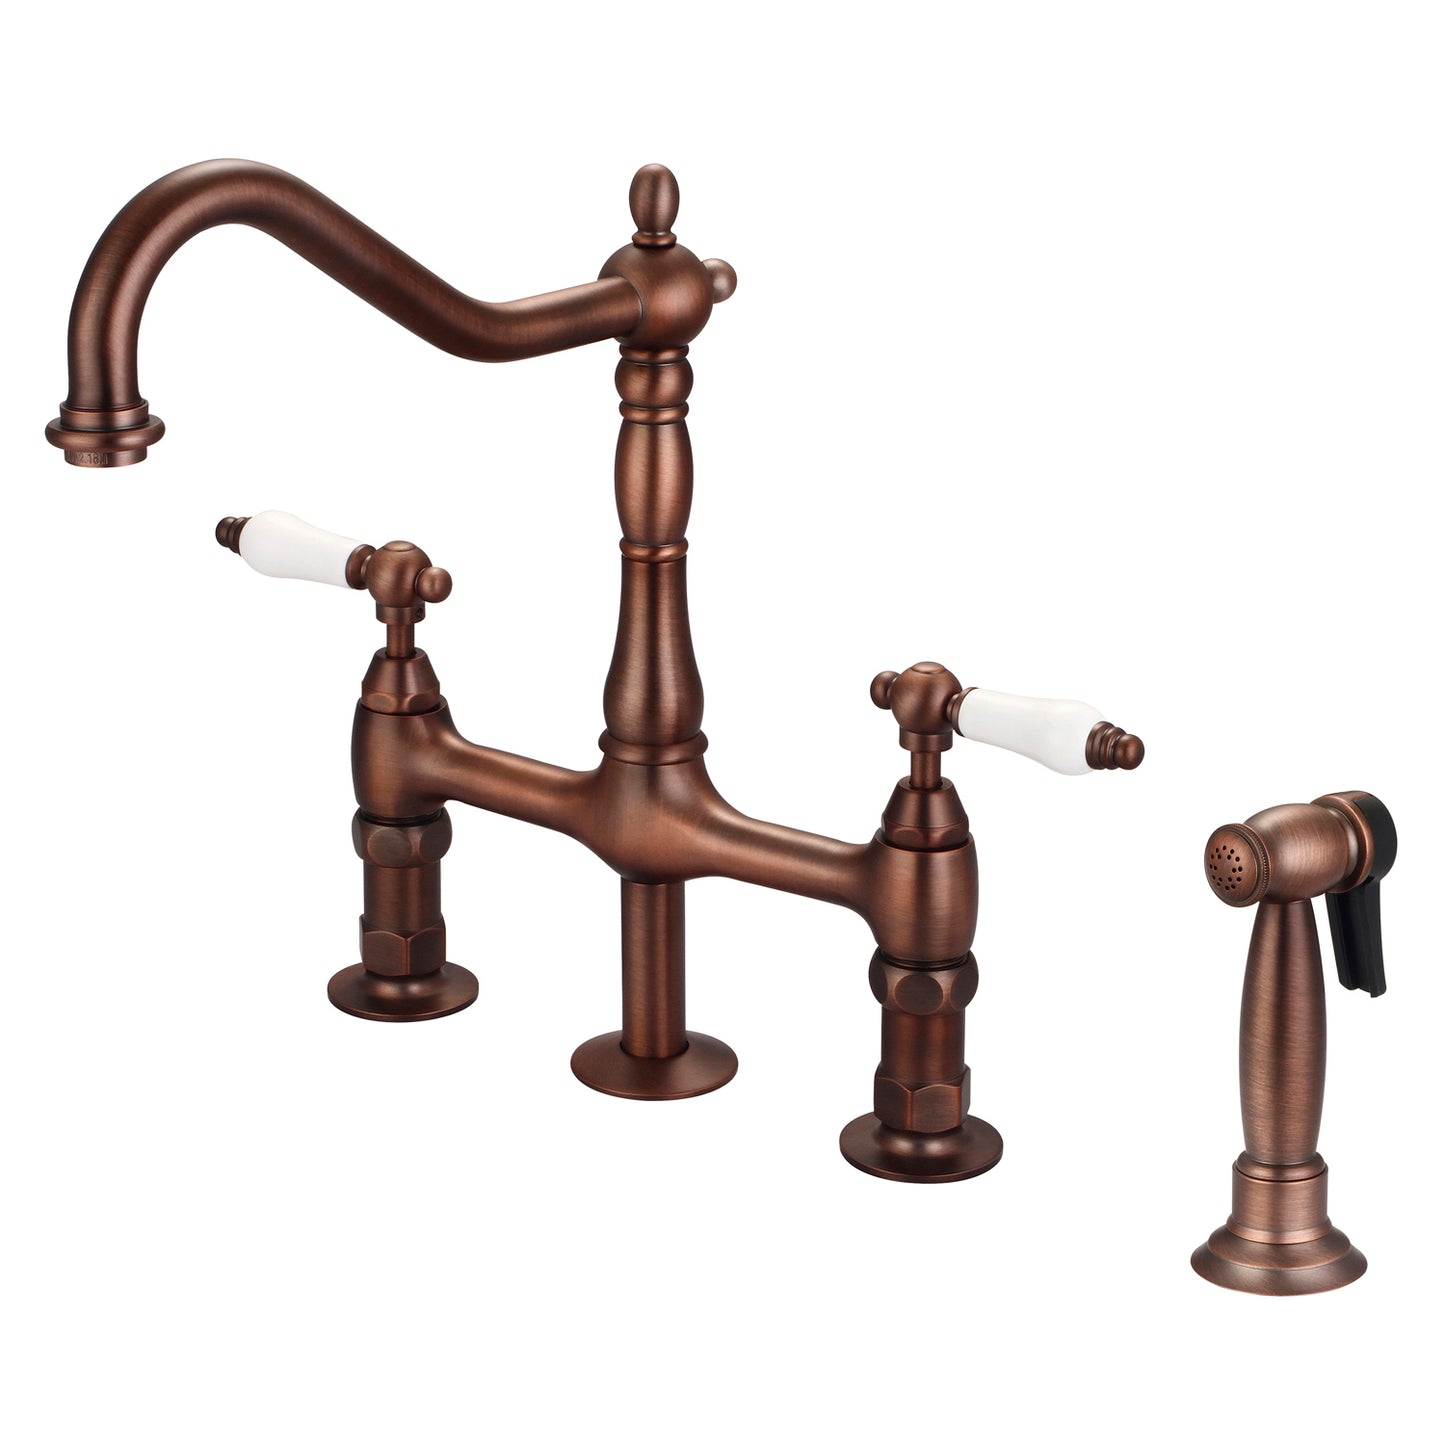 Emral Kitchen Bridge Faucet, Sidesprayer & Porcelain Lever Handles, Oil Rubbed Bronze